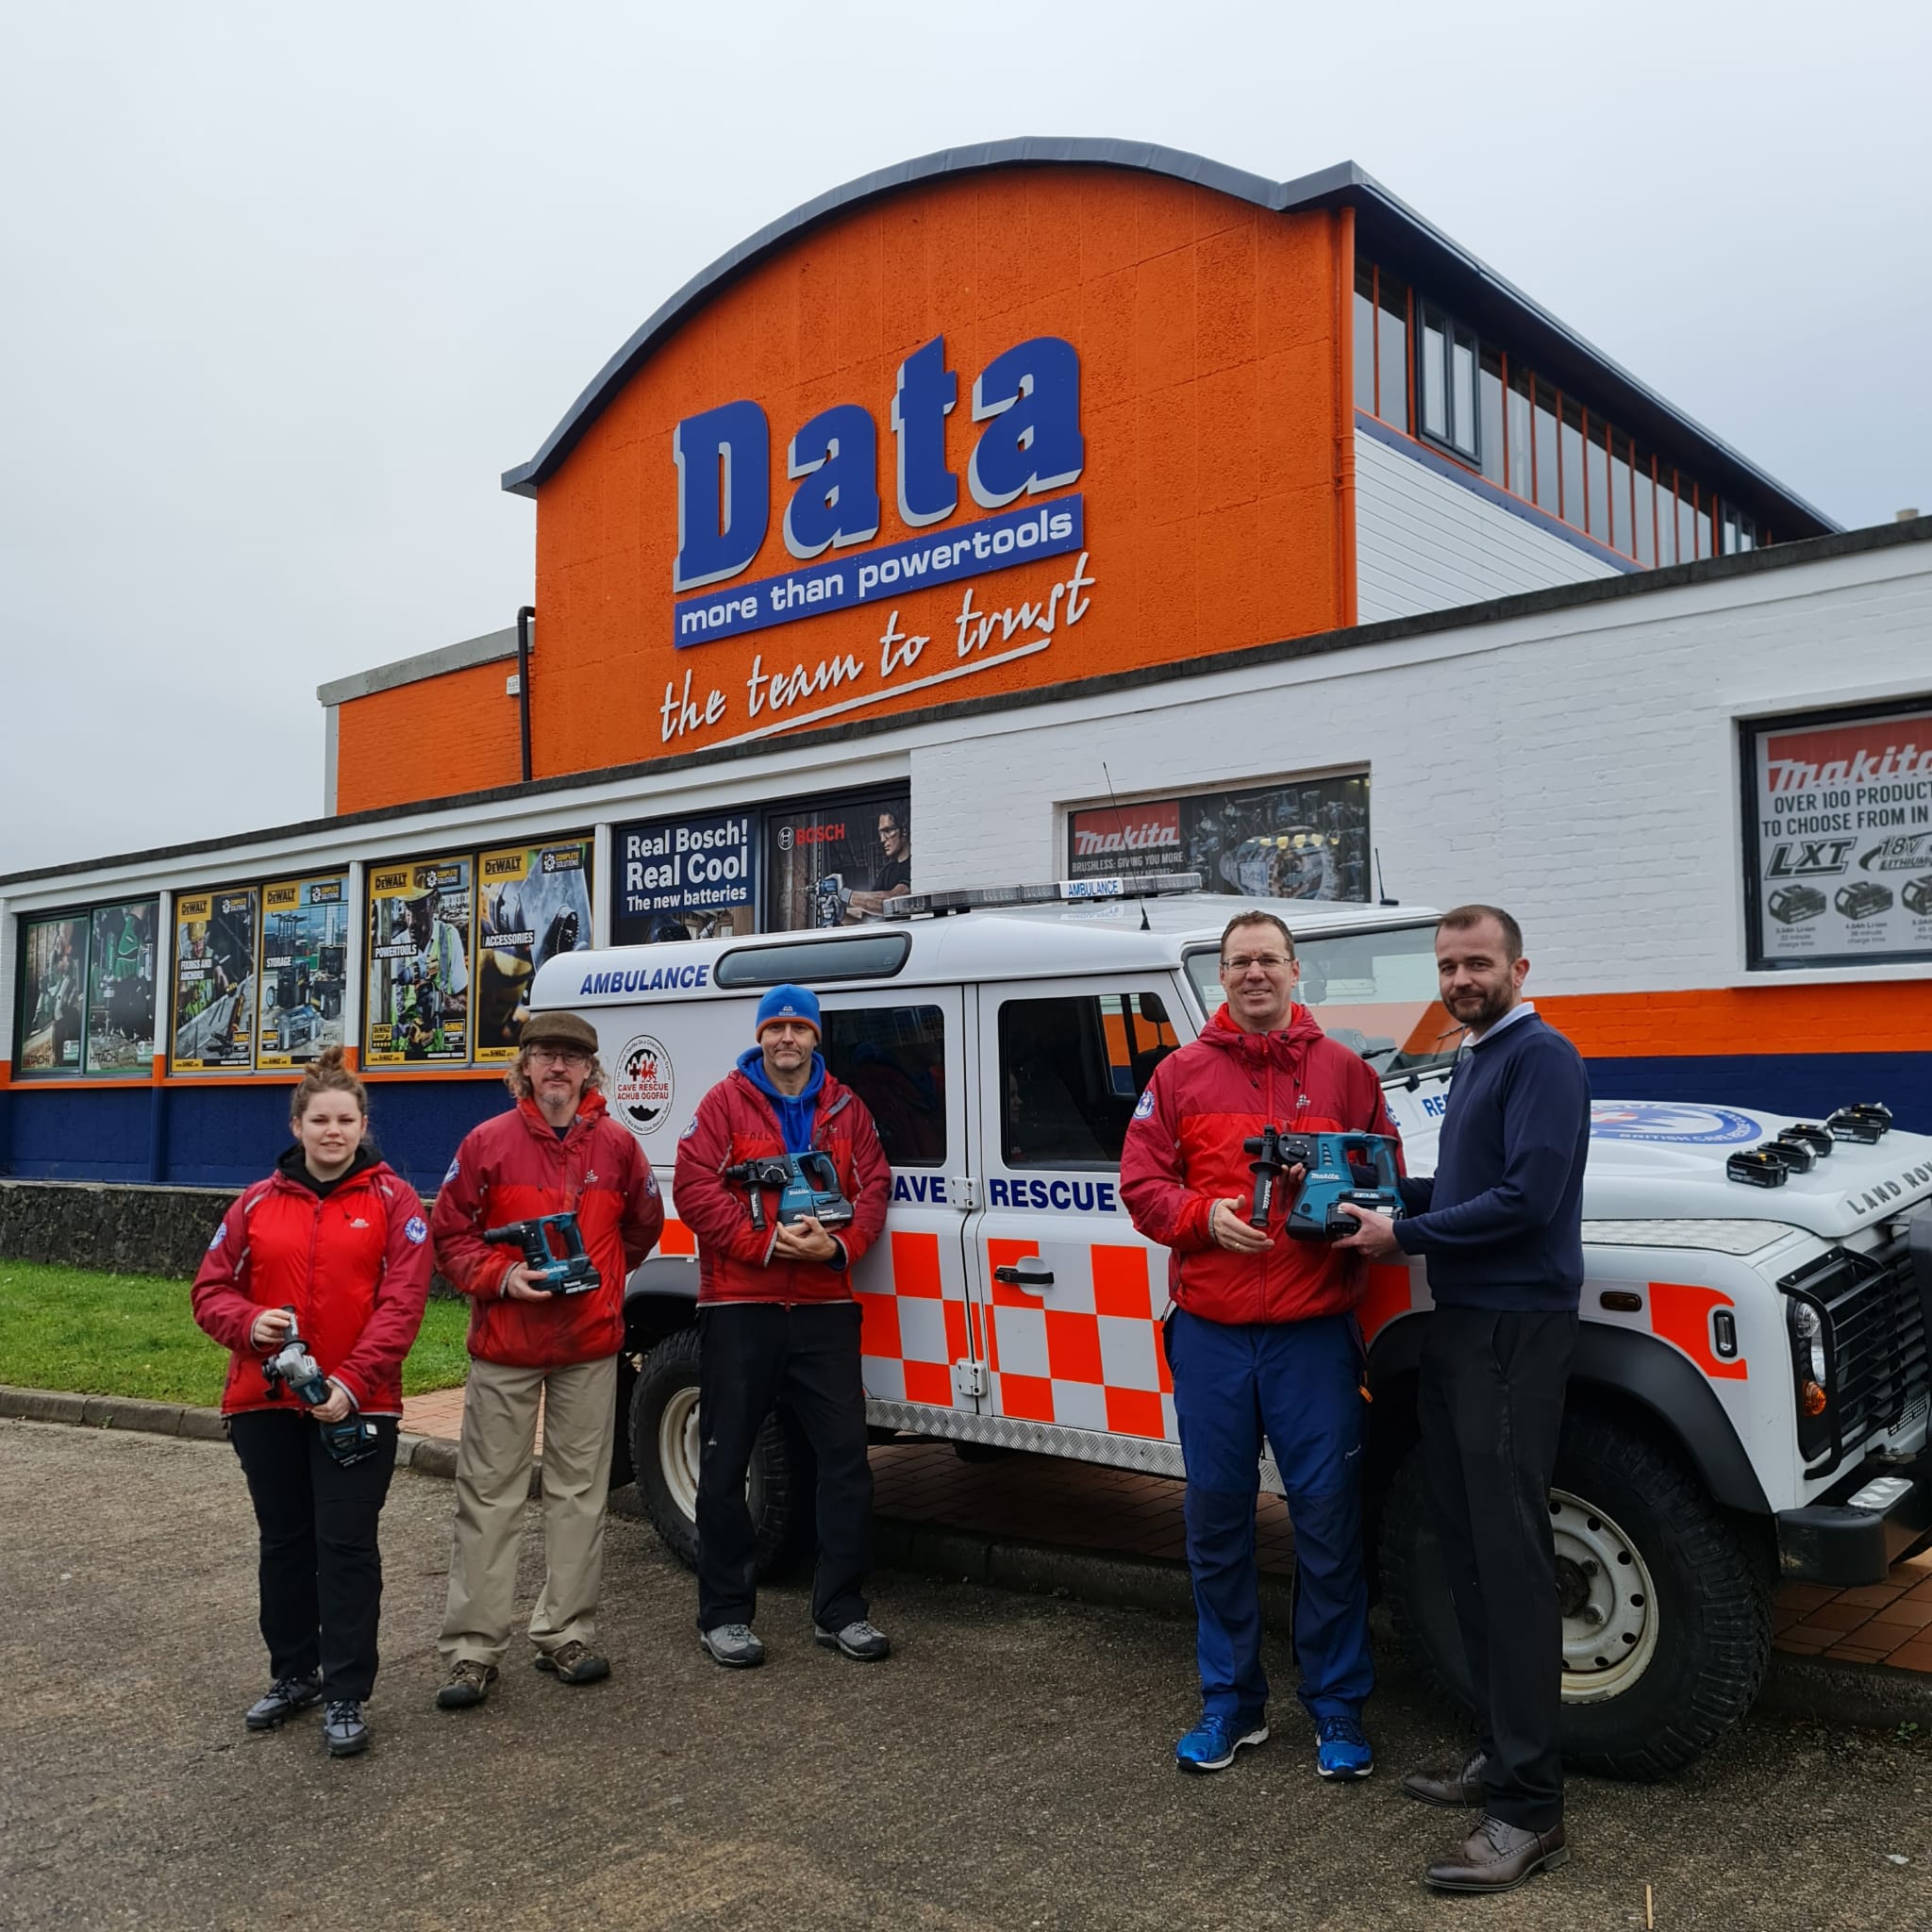 South Wales Cave Rescue Team at Data Powertools Ltd